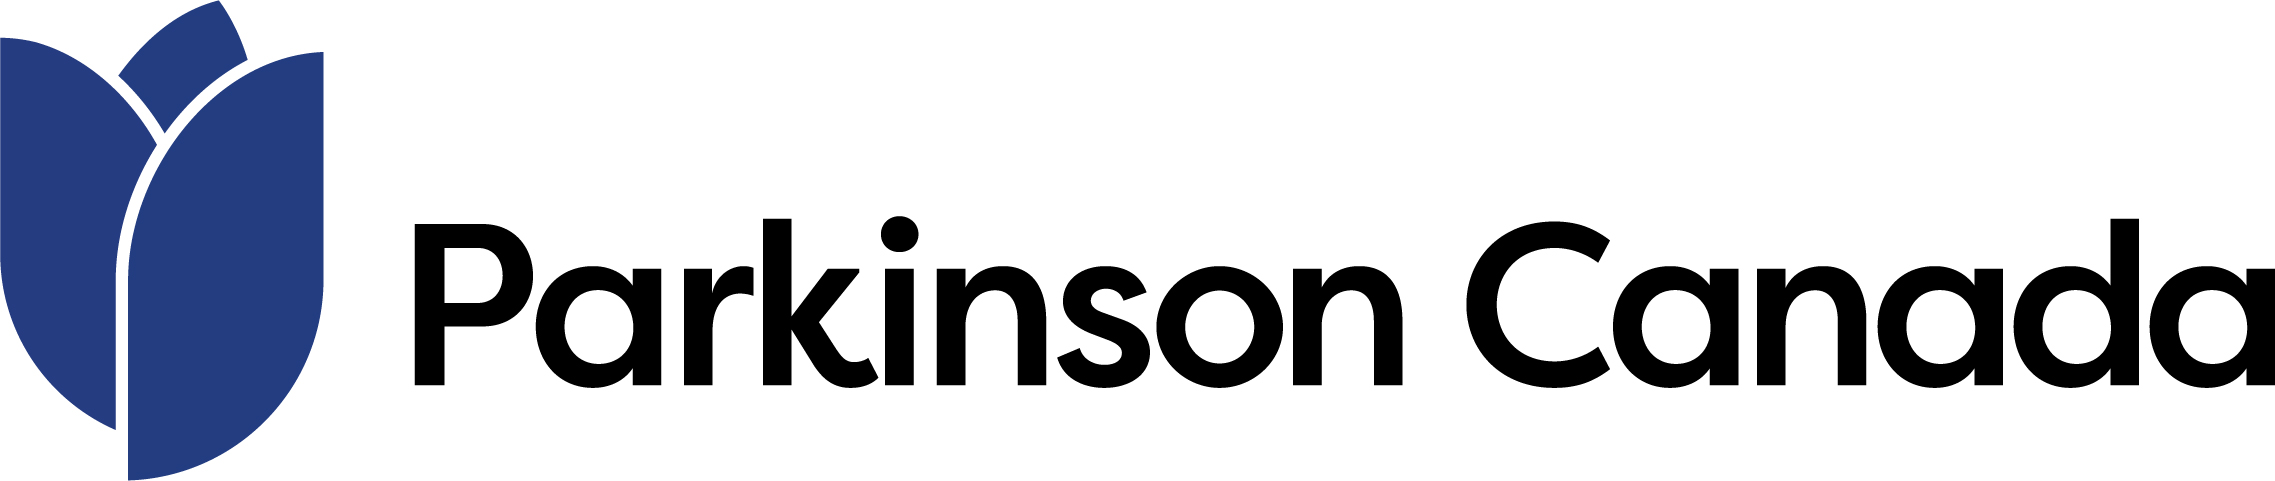 Parkinson Canada Funding Programs logo